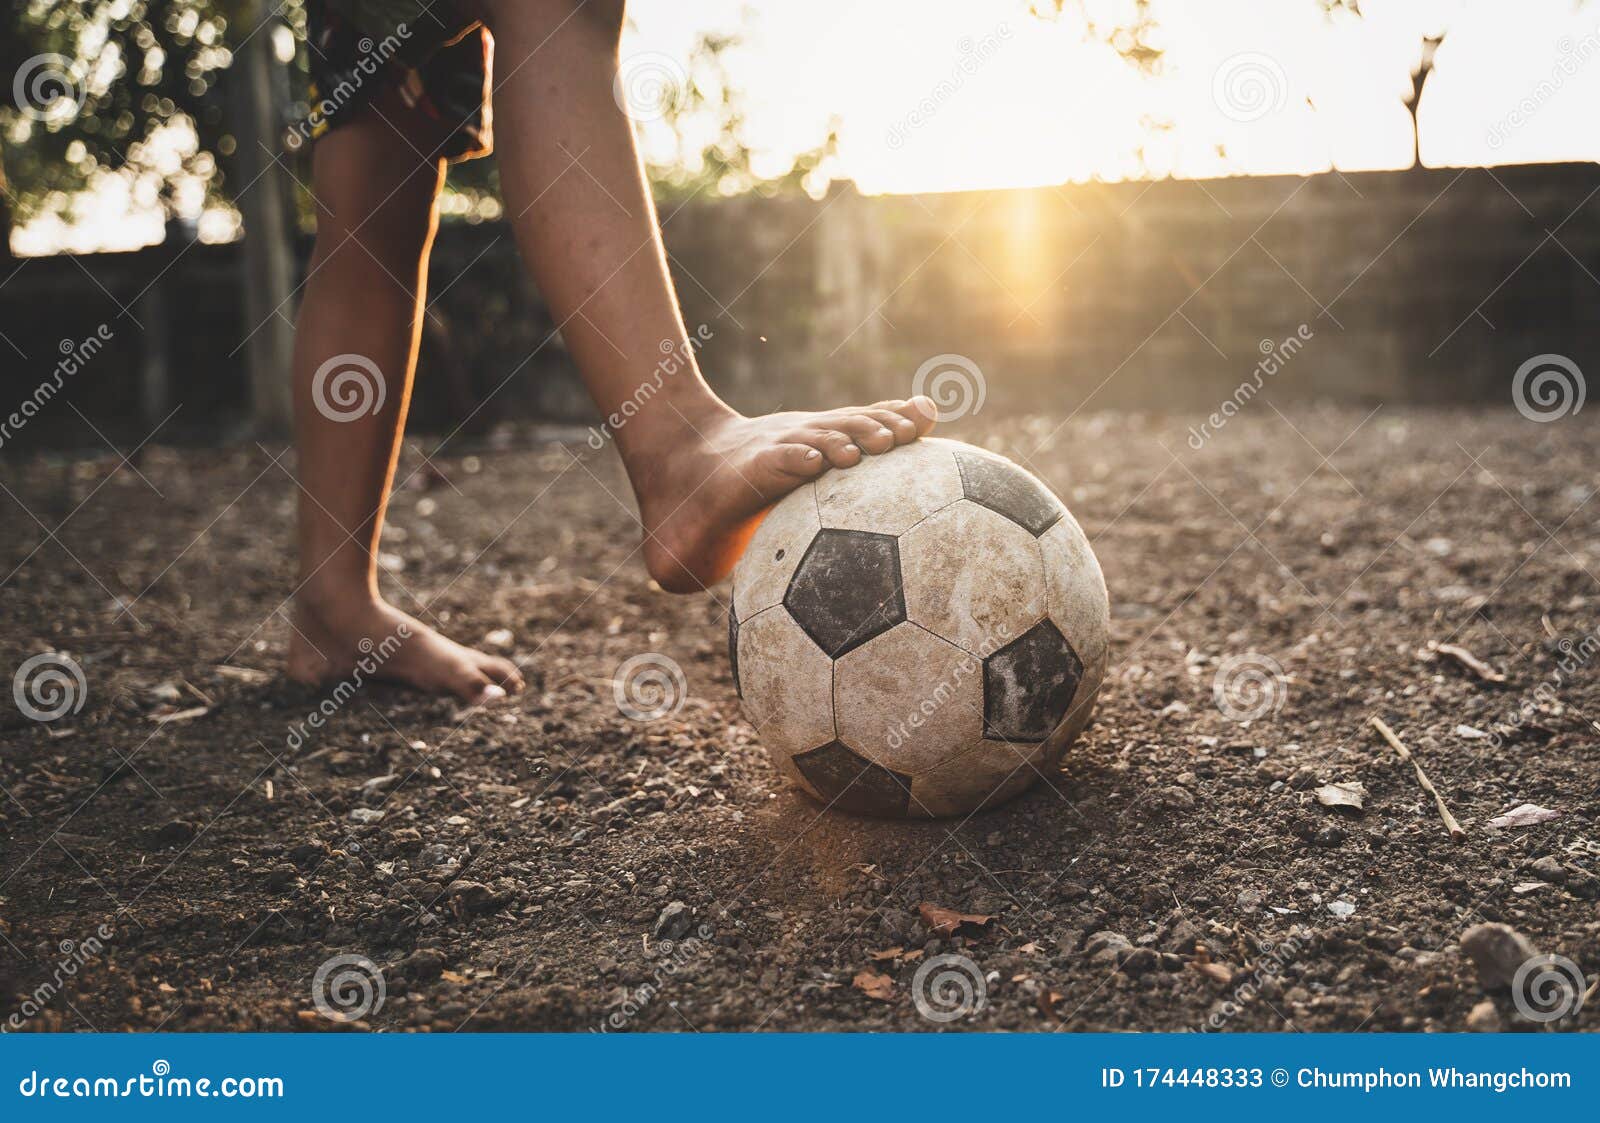 Older Soccer